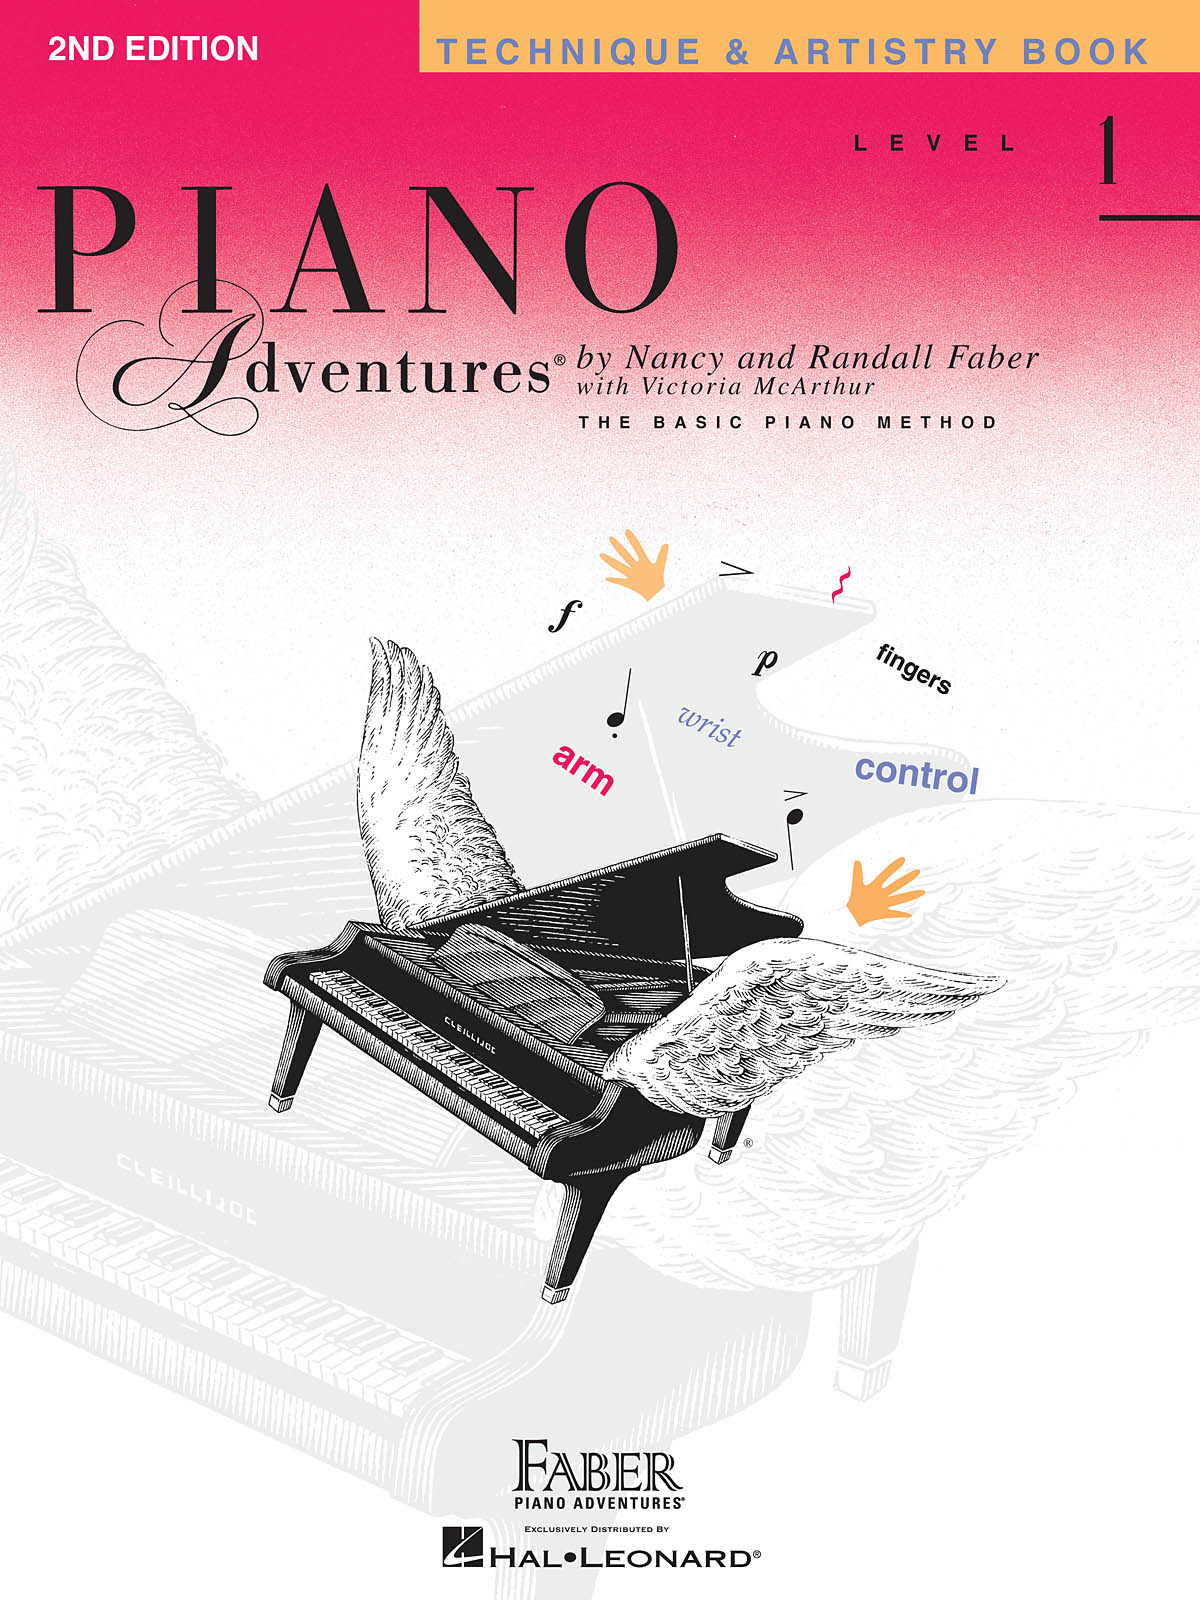 Piano Adventures Technique & Artistry Book - Level 1, 2nd Edition - škola hry na klavír